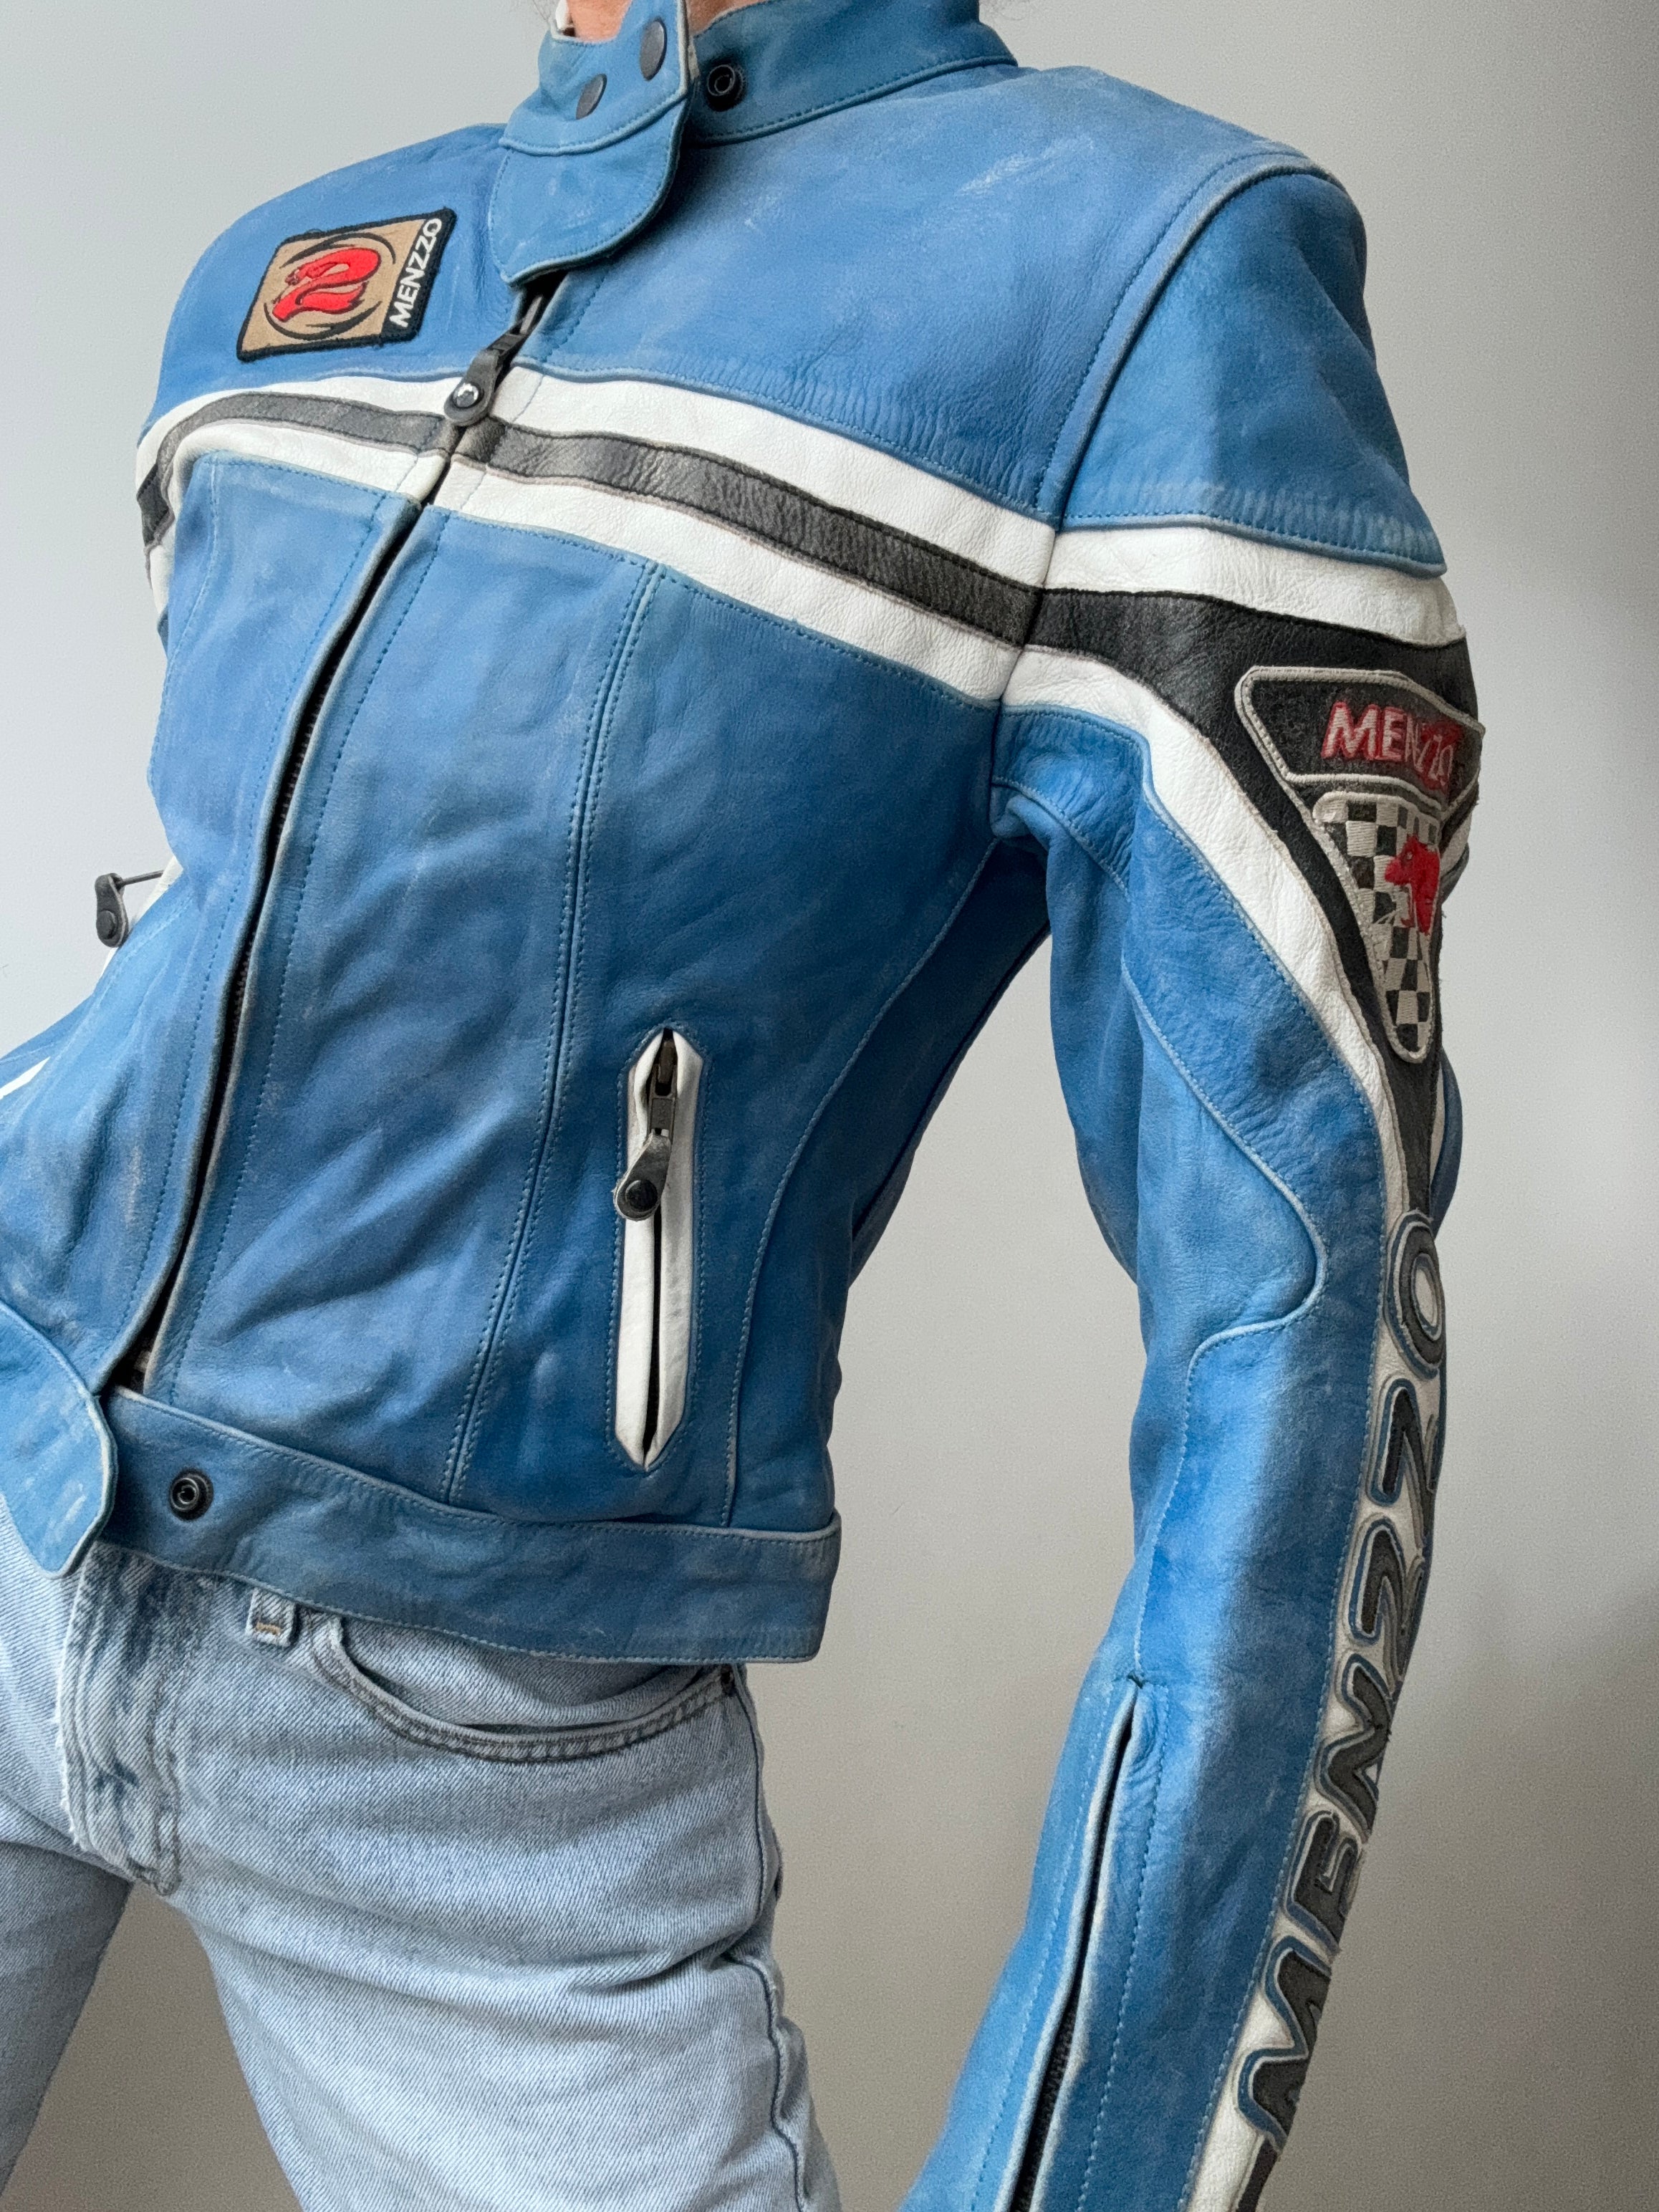 Future Nomads Jackets Small Vintage Menzzo Motorbike Jacket